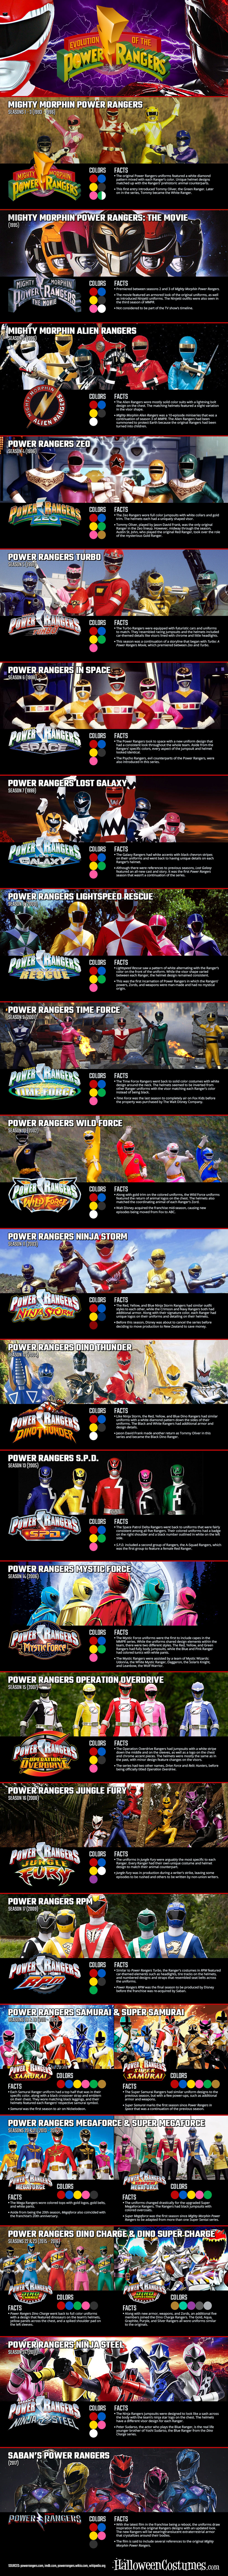 Power Rangers Evolution Infographic